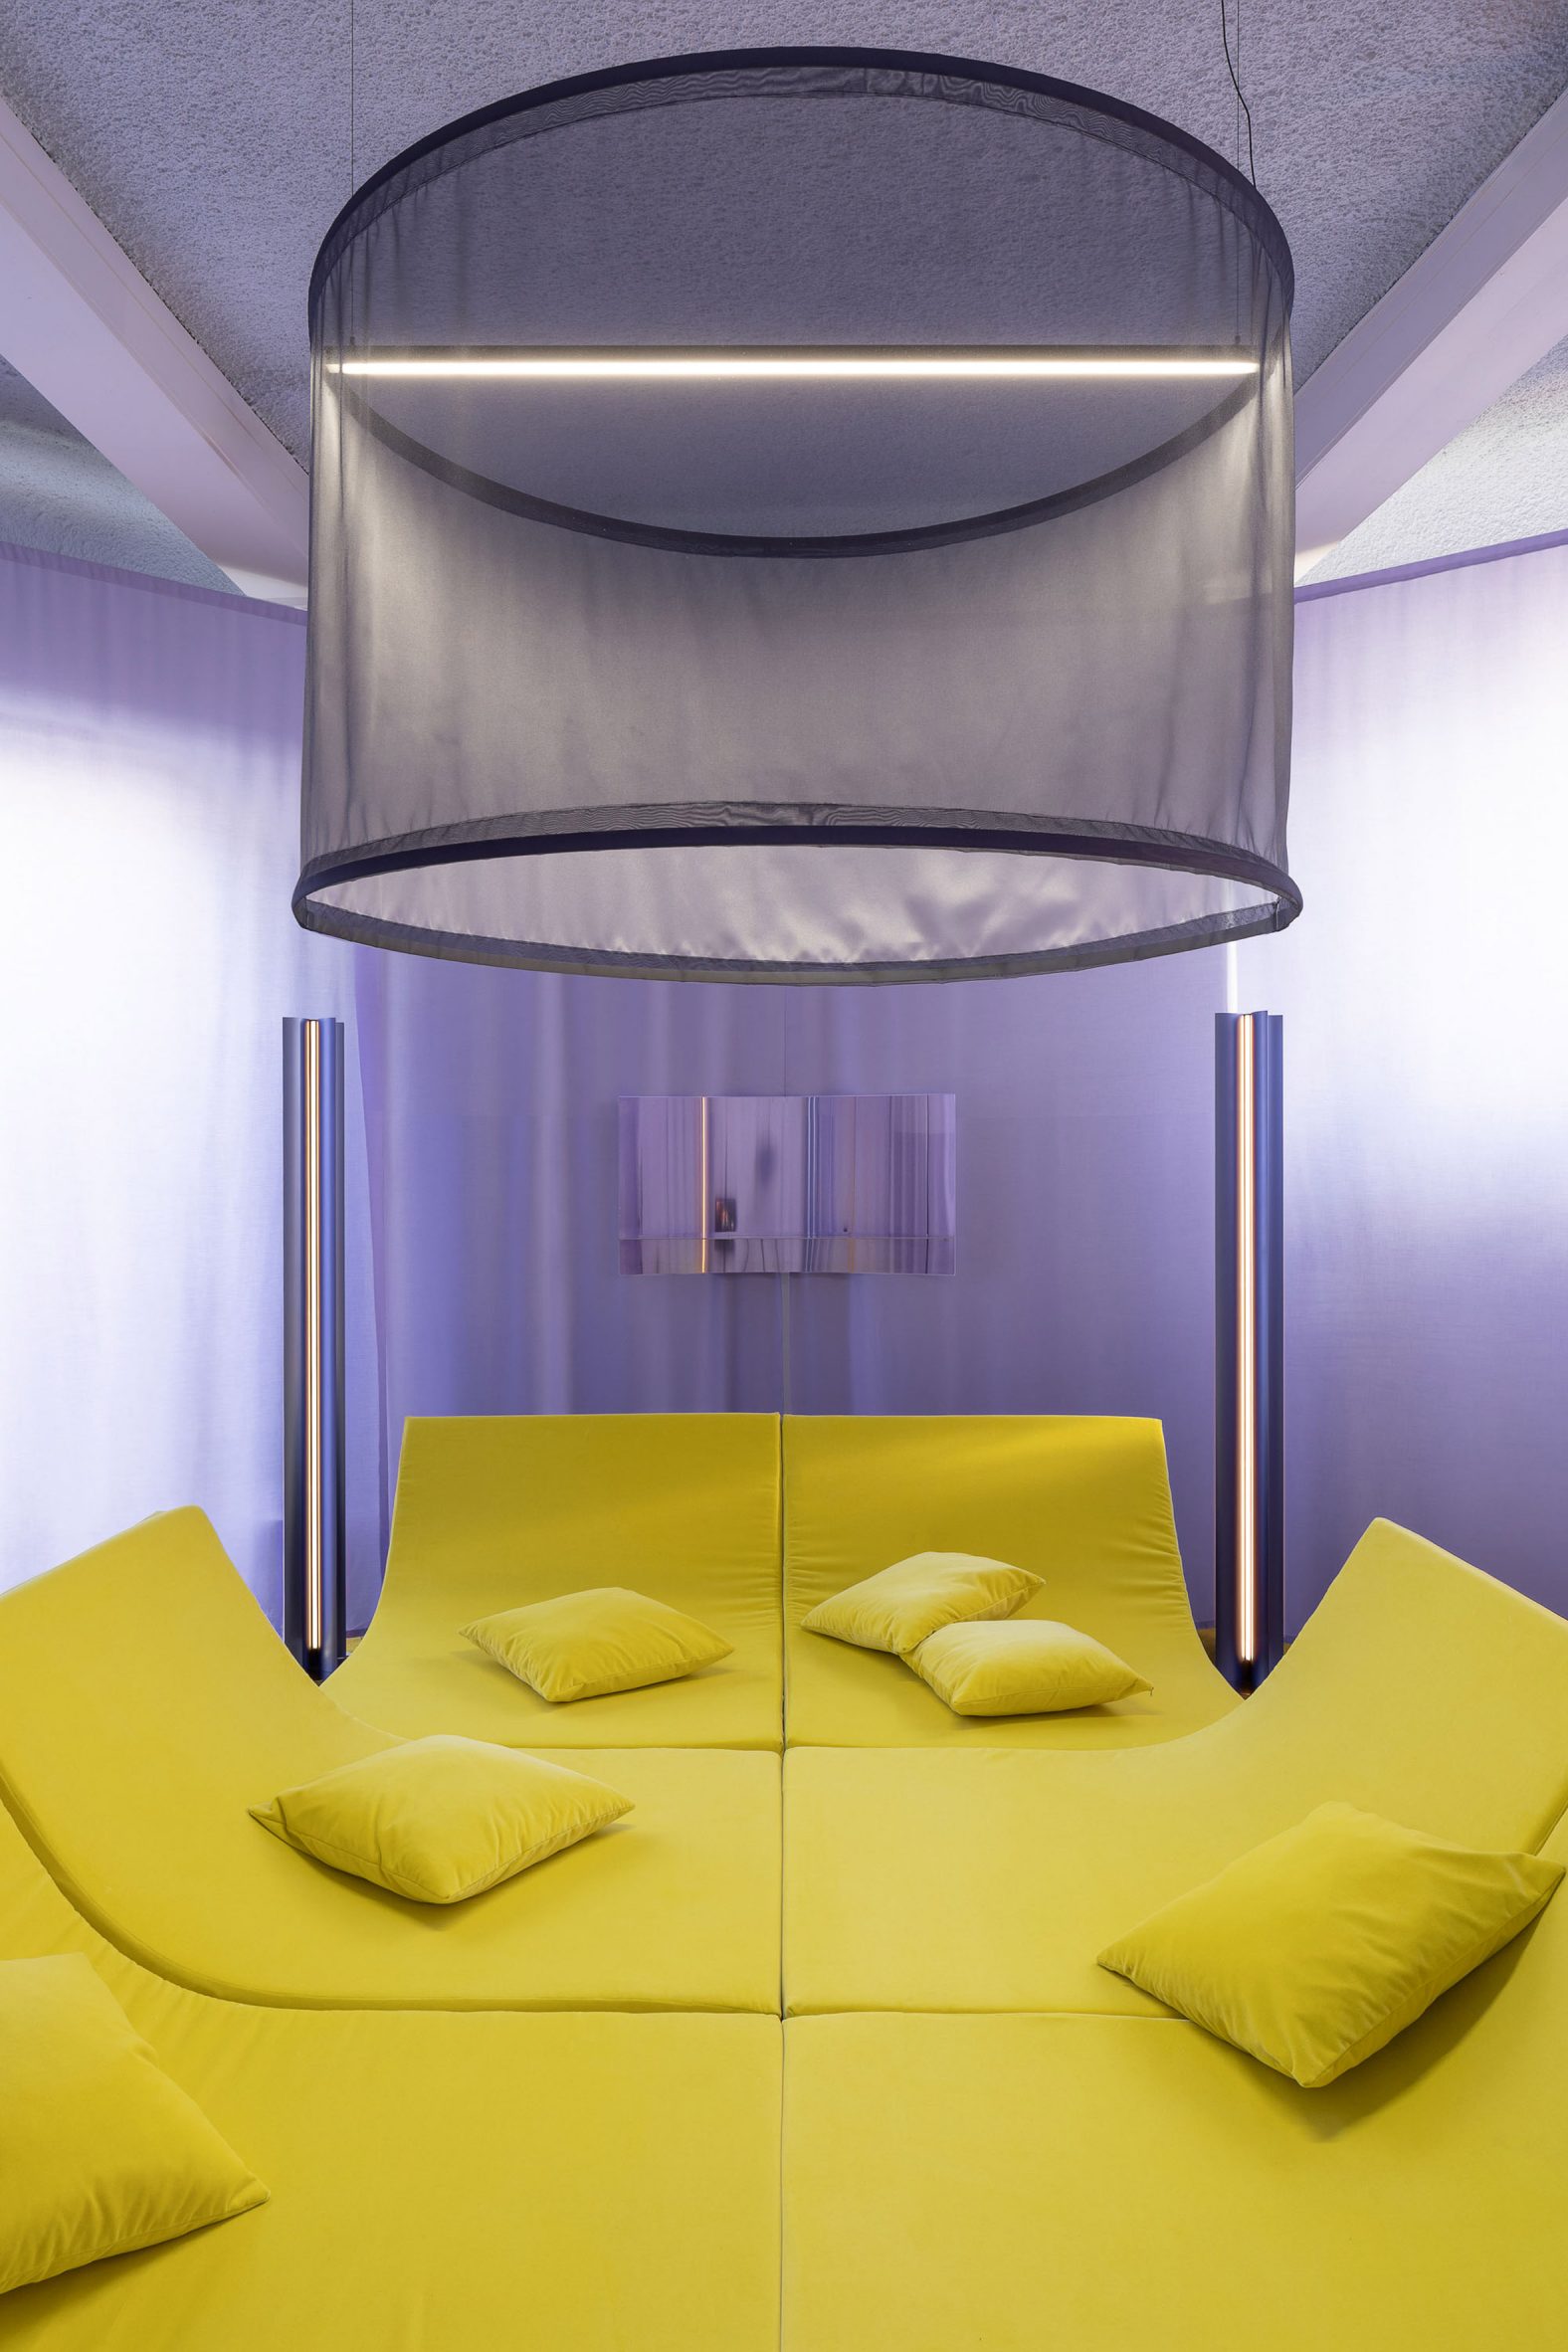 Diorno installation in Milan by Panter & Tourron and Davide Rapp